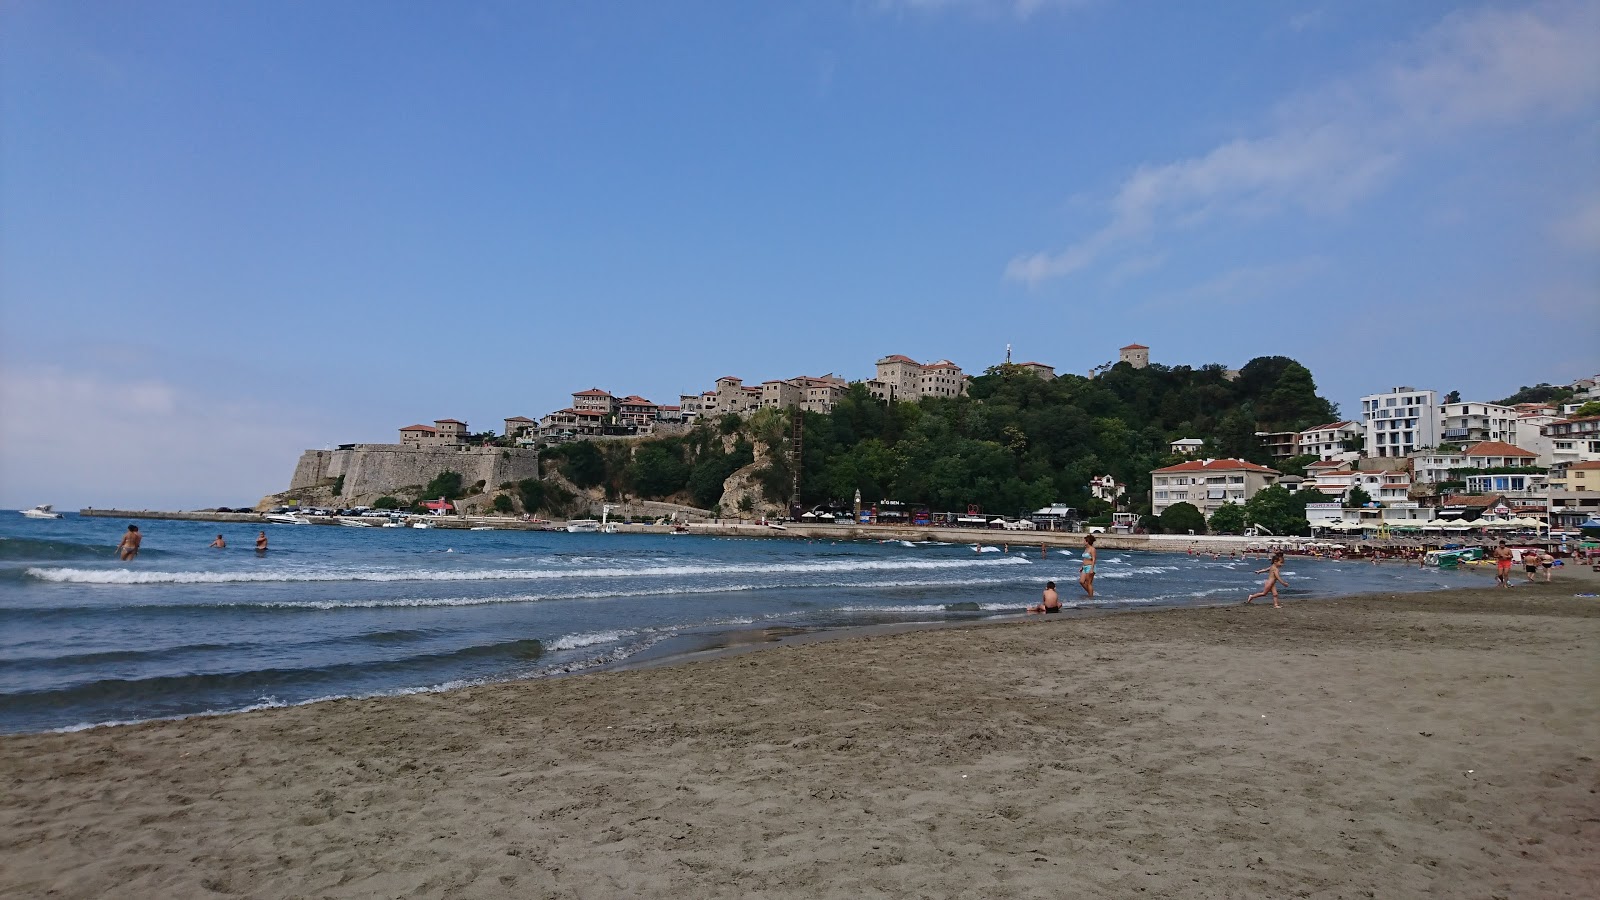 Fotografie cu Ulcinj small beach cu nivelul de curățenie in medie